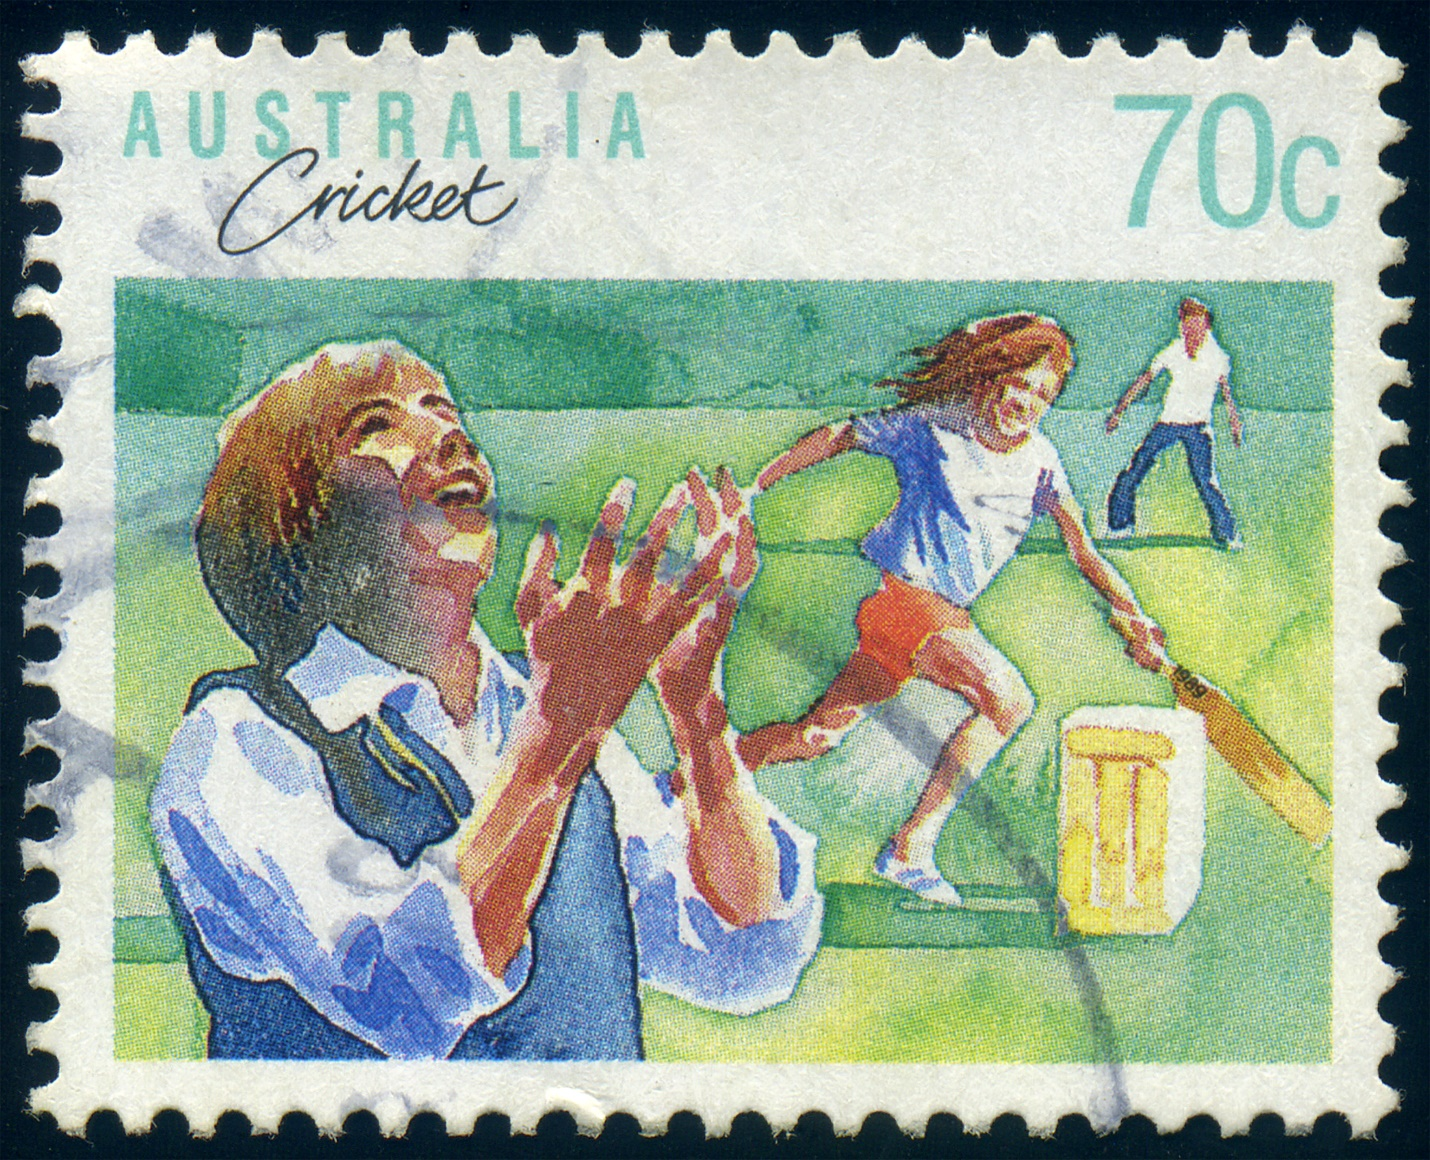 An Australian stamp with women’s cricket illustration